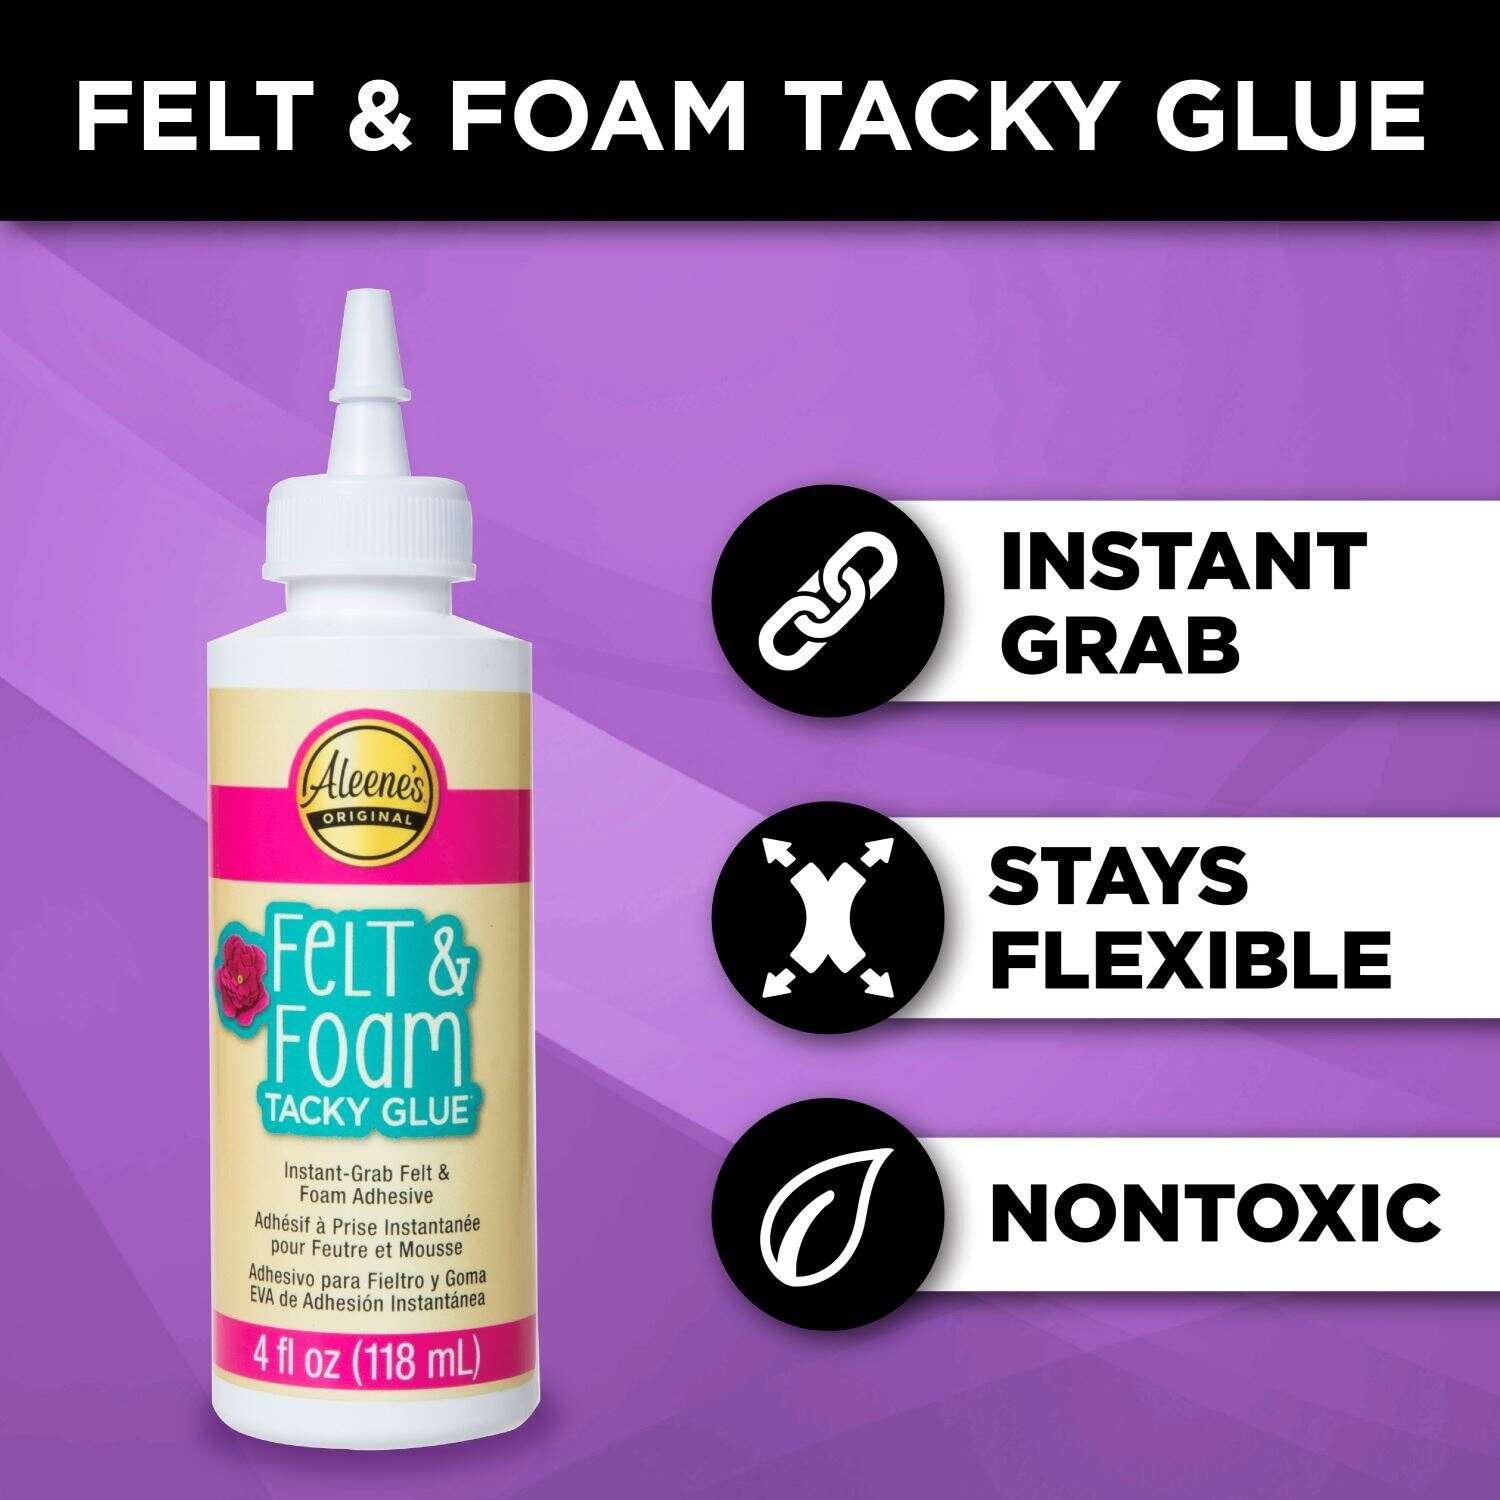 What Glue Works Best on Felt?